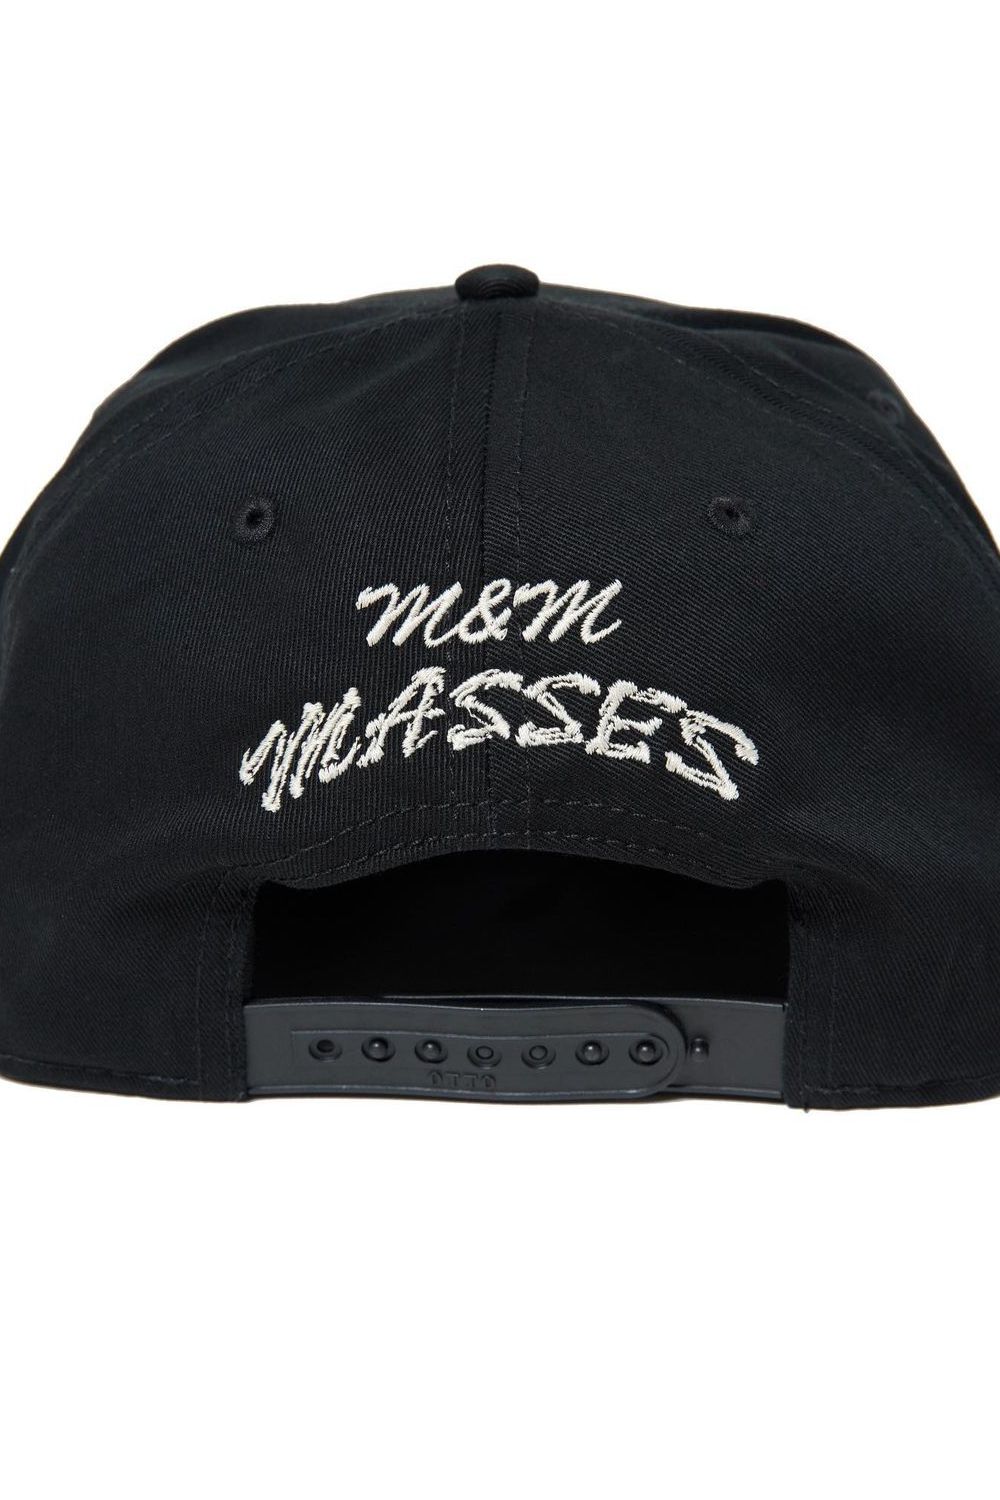 M&M CUSTOM PERFORMANCE - SNAPBACK BB CAP (×MASSES) (BLACK 